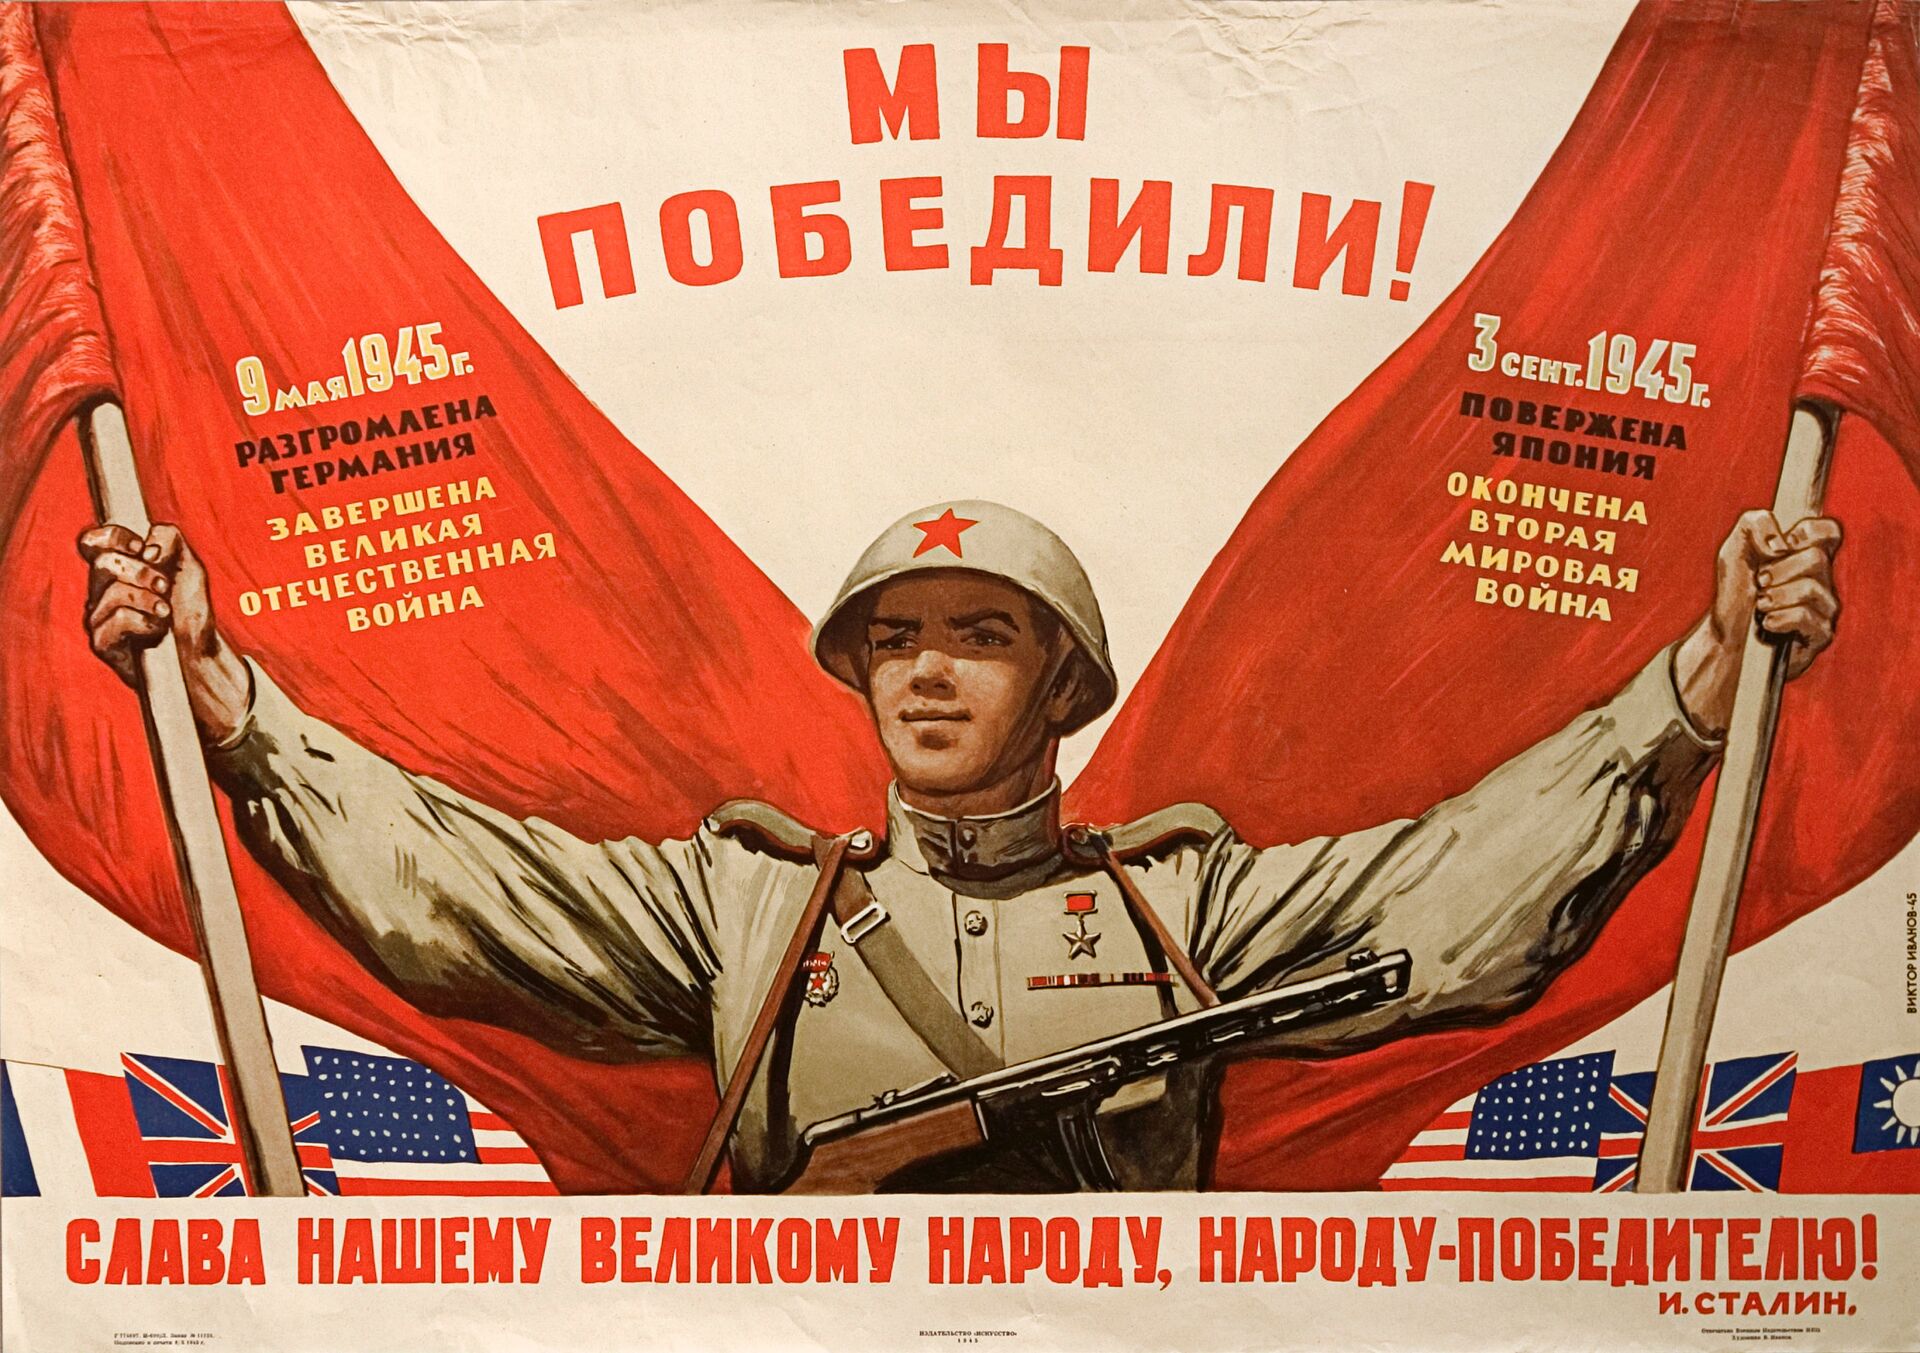 Виктор Иванов: „Победили смо! Слава нашем великом народу, народу-победнику!“, 1945. година - Sputnik Србија, 1920, 13.07.2021